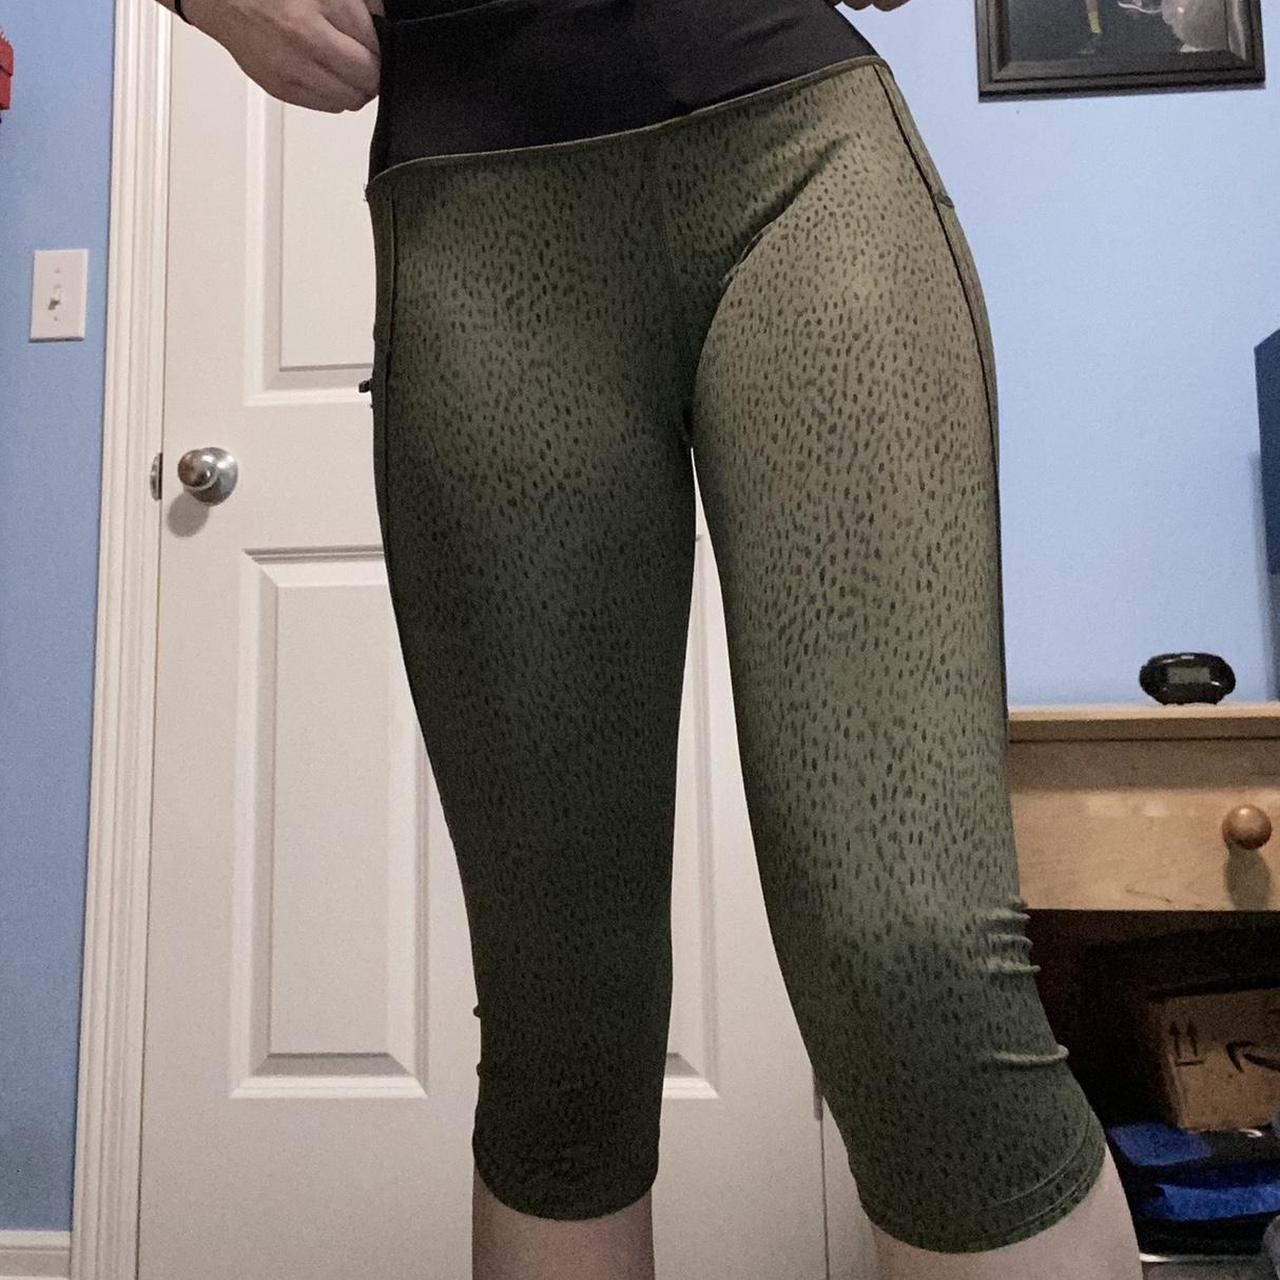 Lululemon leggings - olive green , No tag but fits